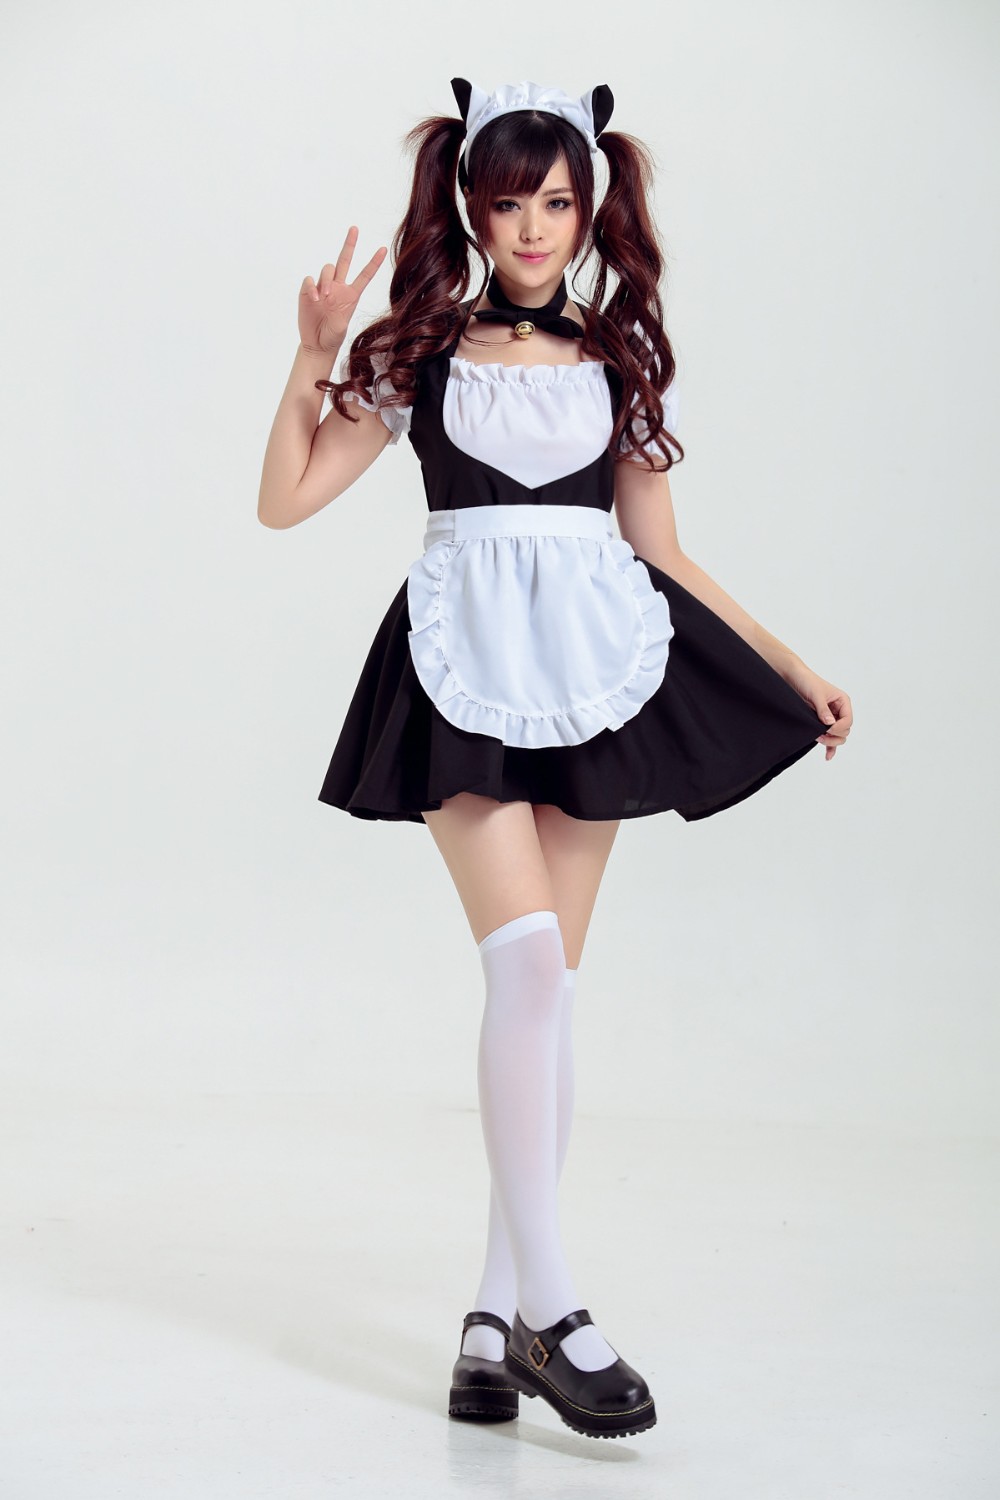 Kawaii Anime Cosplay Lingerie Sexy Halloween Bunny Costume Porn Bow Knot Maid Outfit School Girl